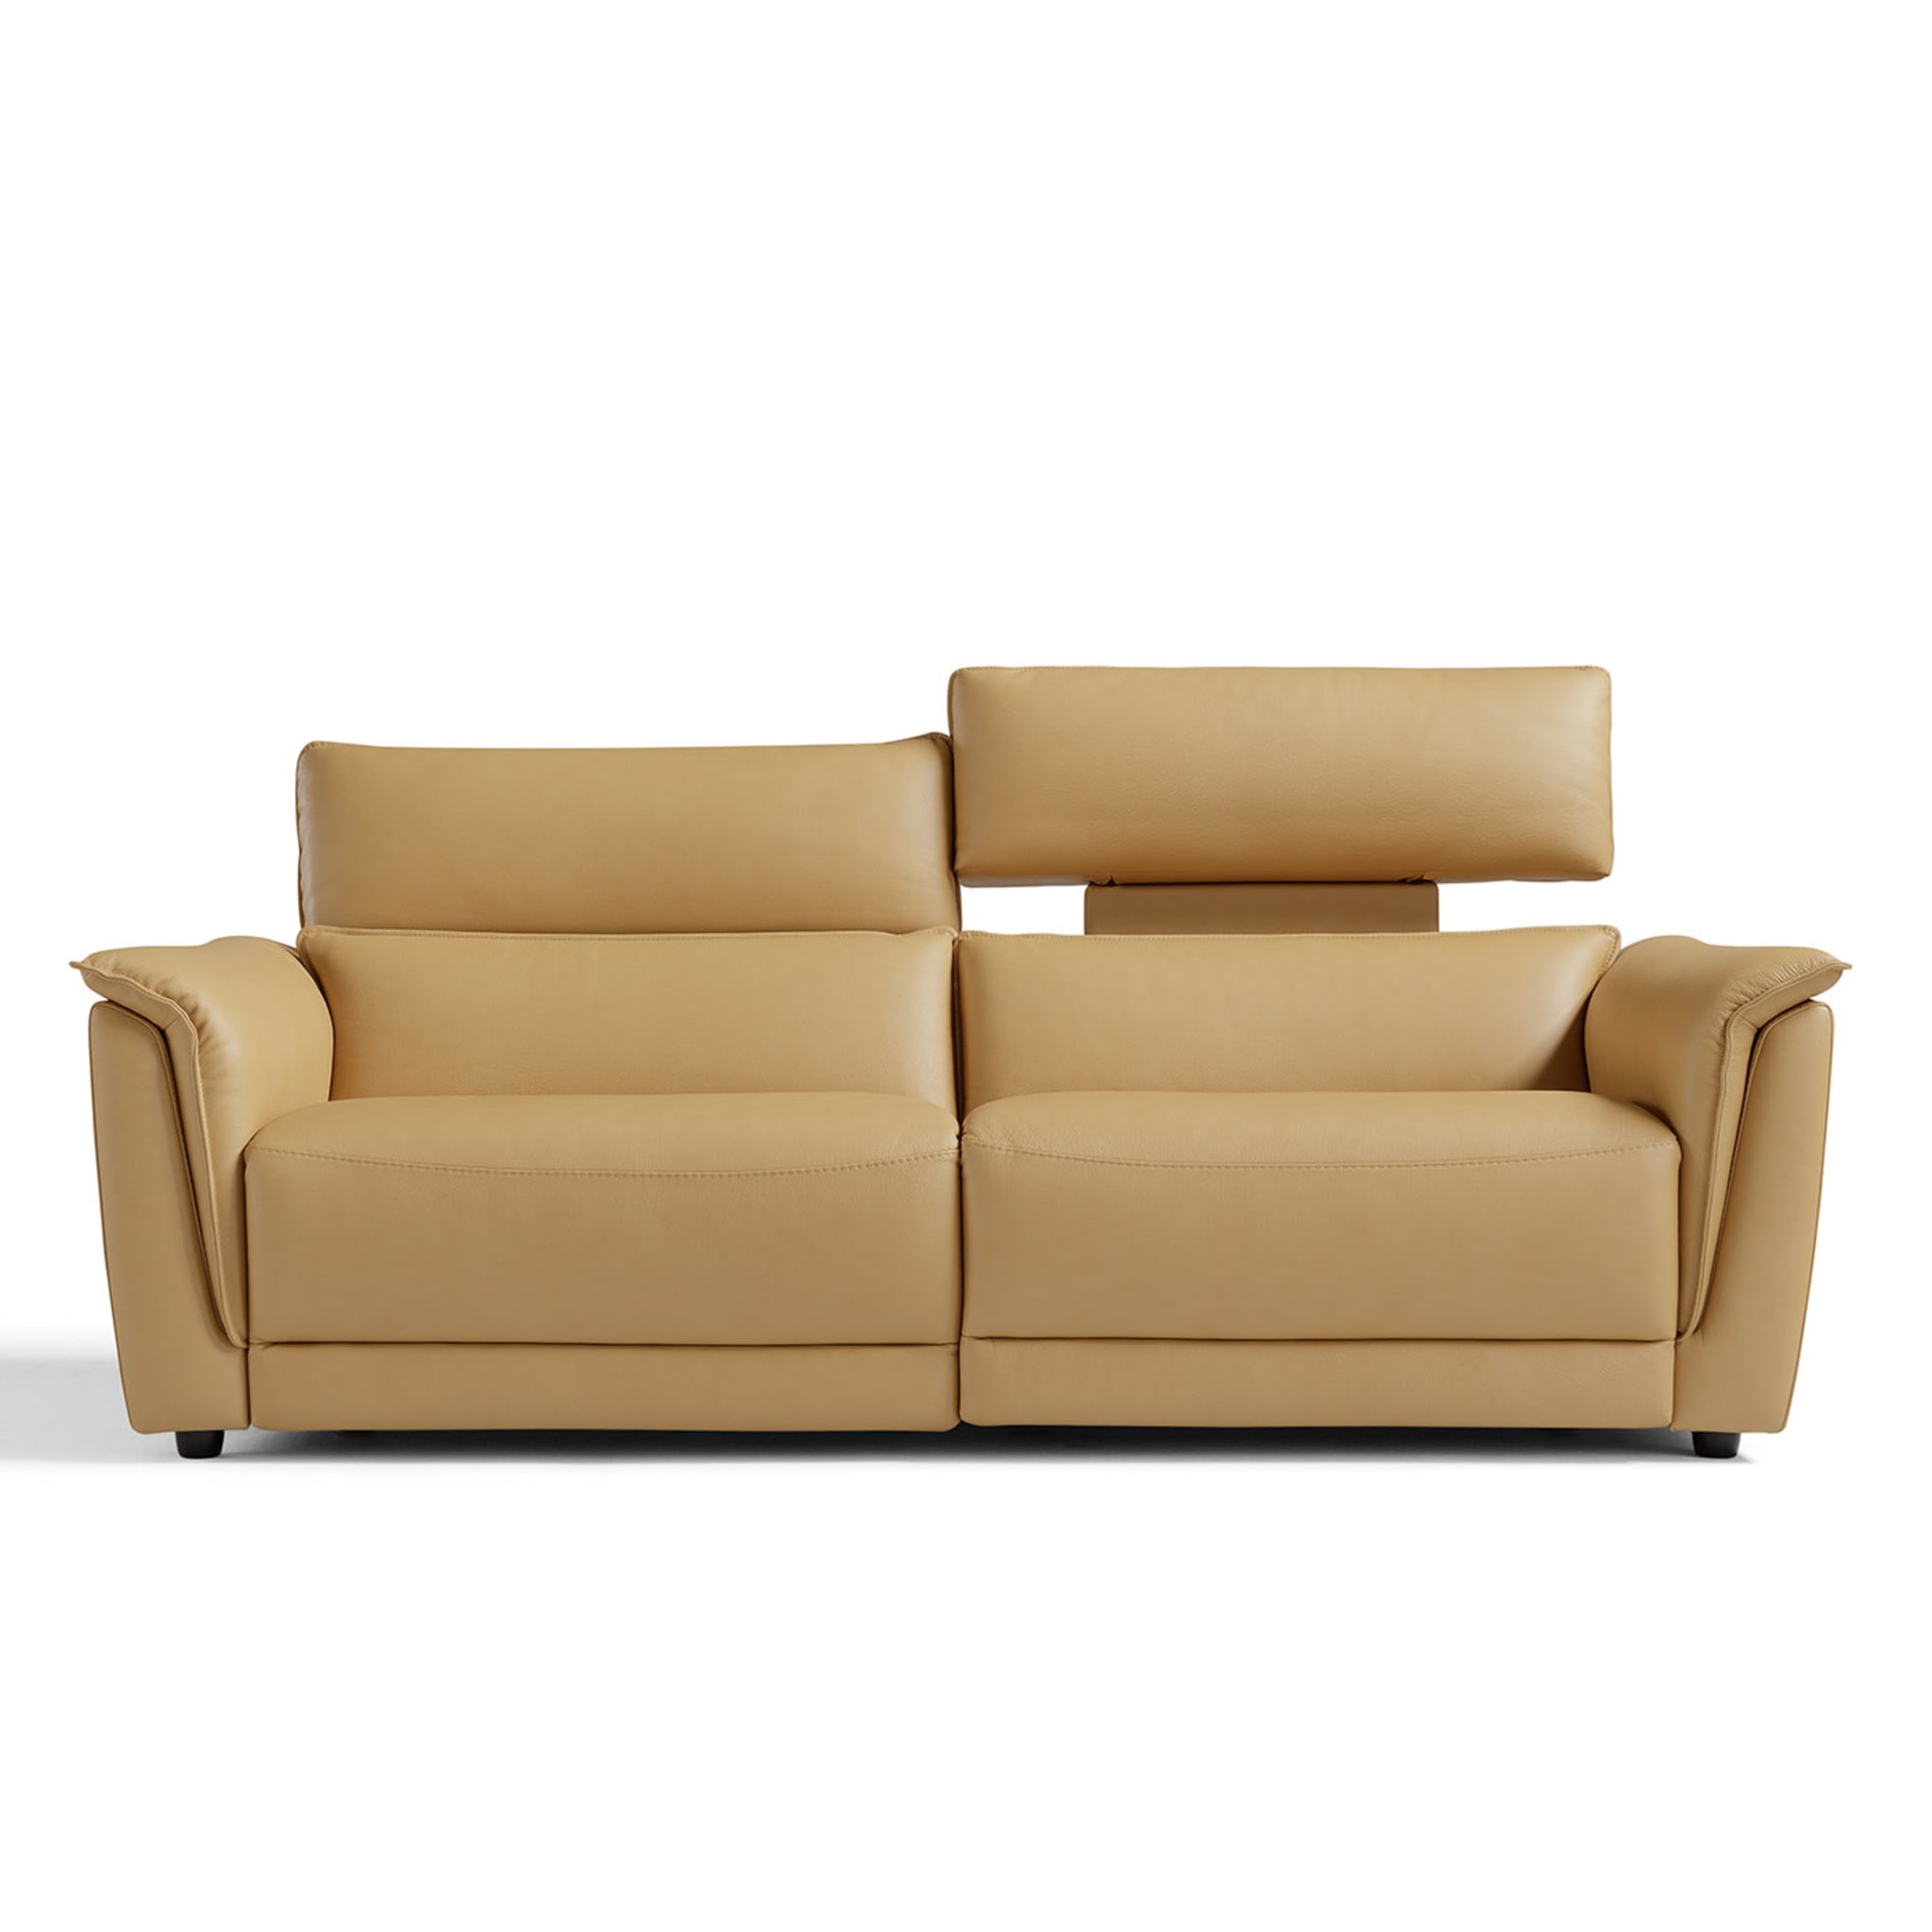 Bovino Sand Leather 2-Seater Armchair - Alternative view 3